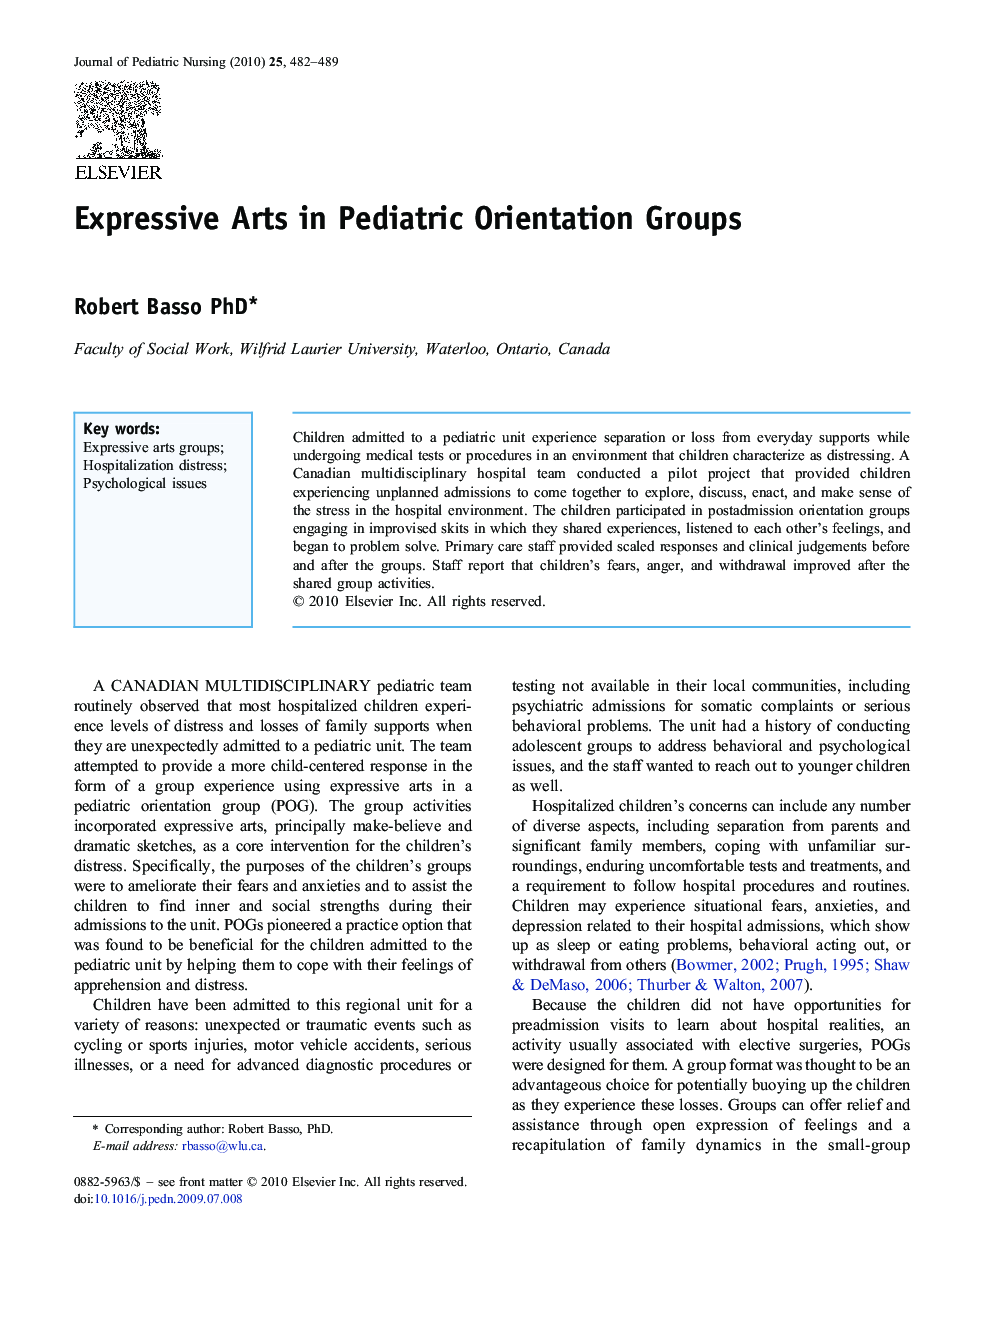 Expressive Arts in Pediatric Orientation Groups